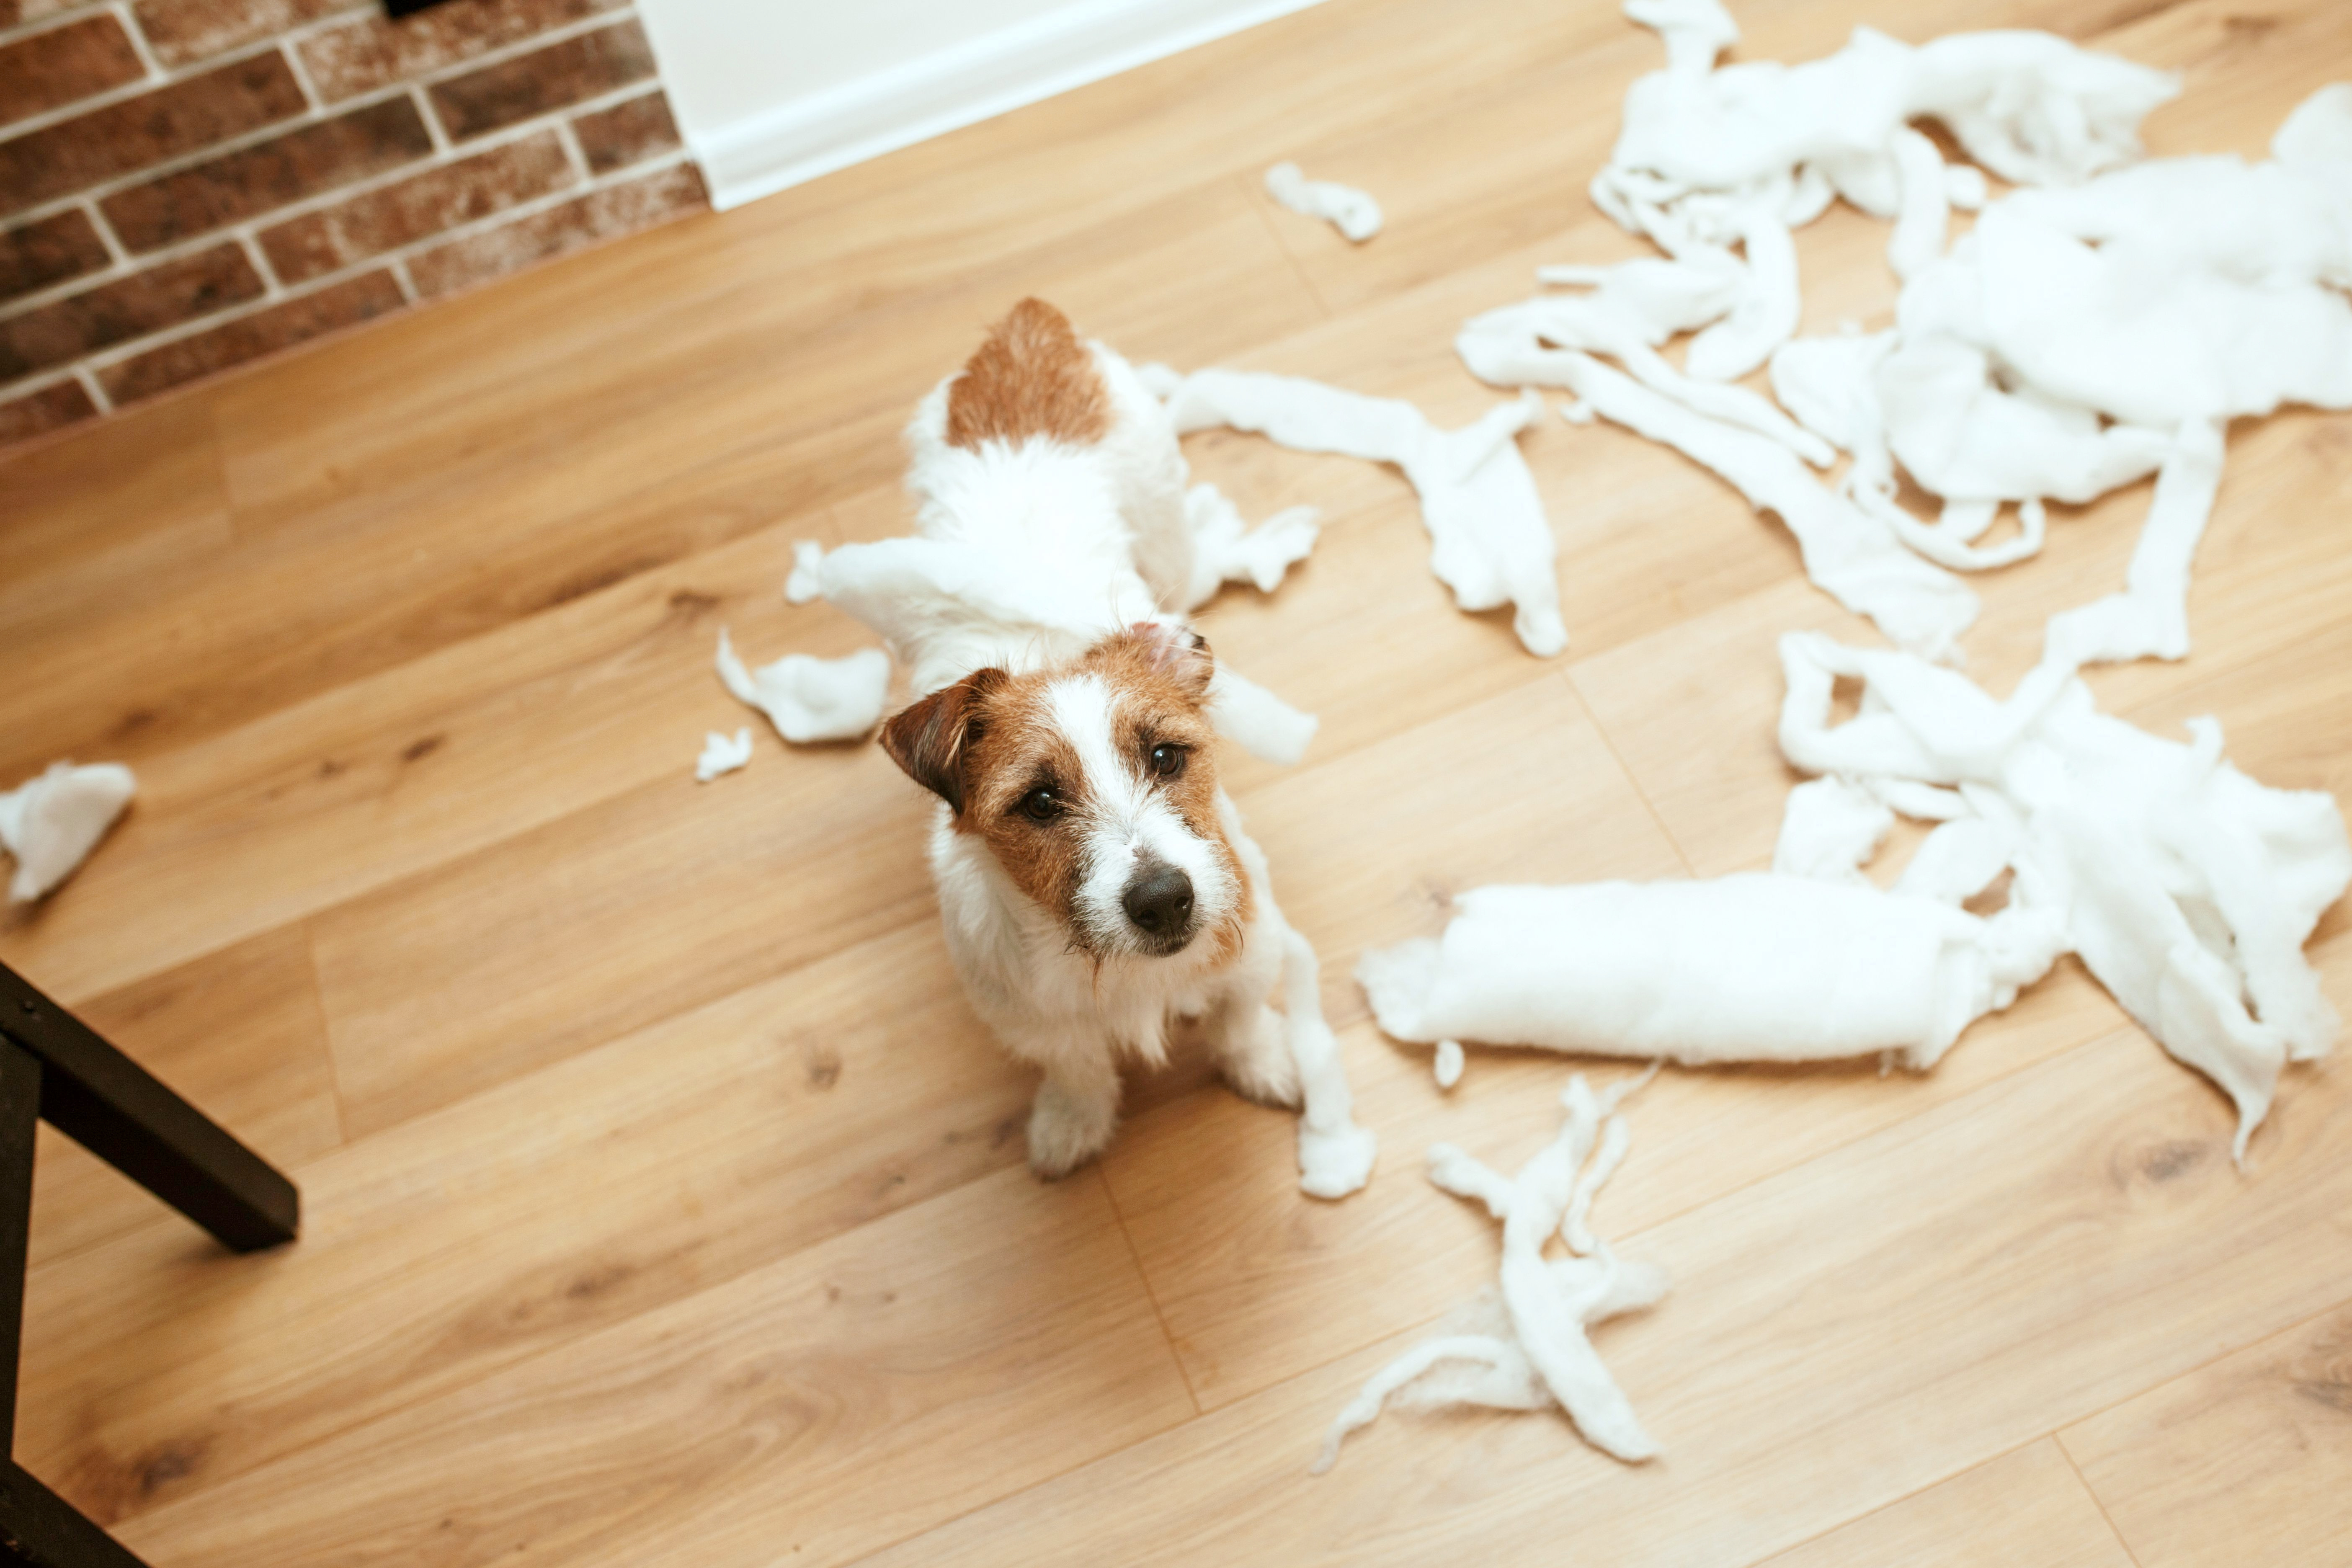 Dog with puppy dog eyes has shredded paper